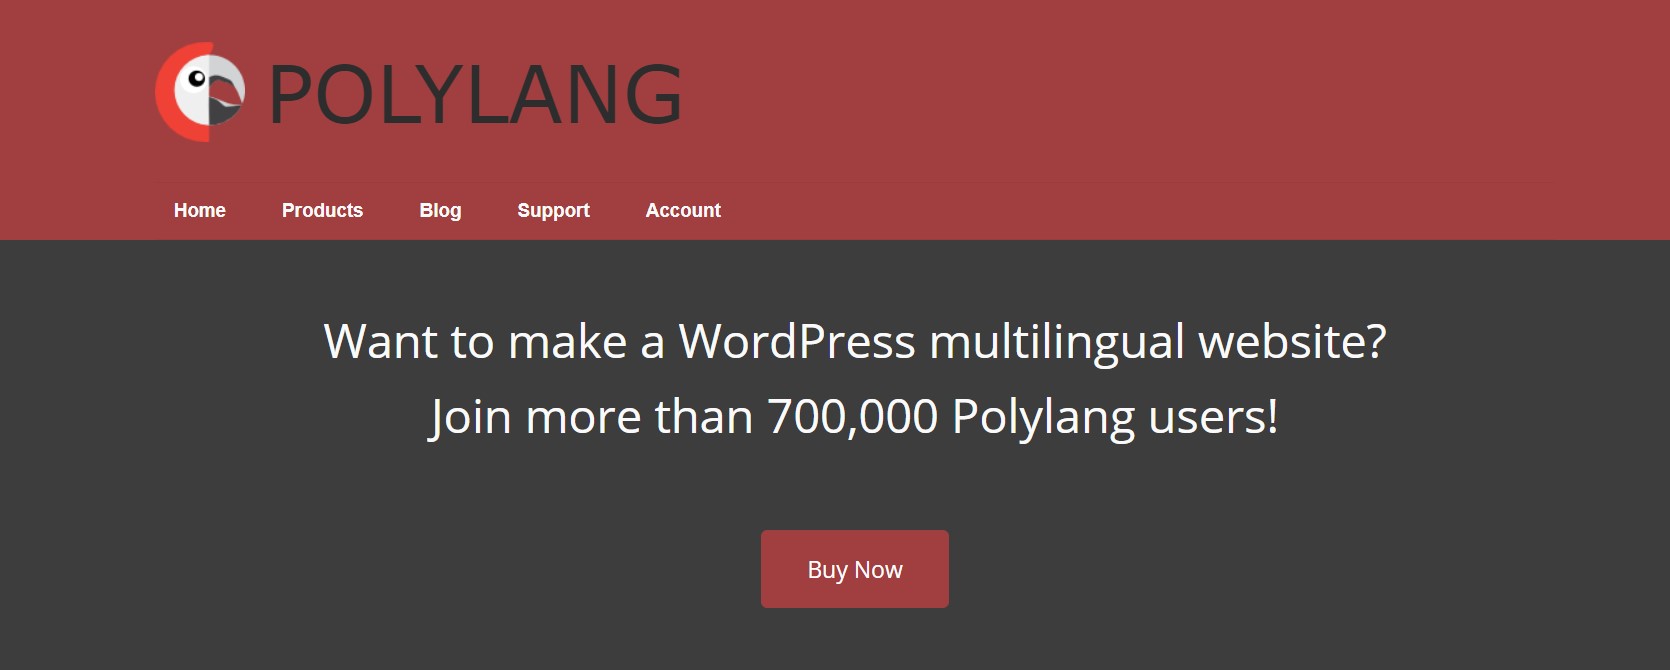 Polylang Makes Your Wordpress Website Multilingual